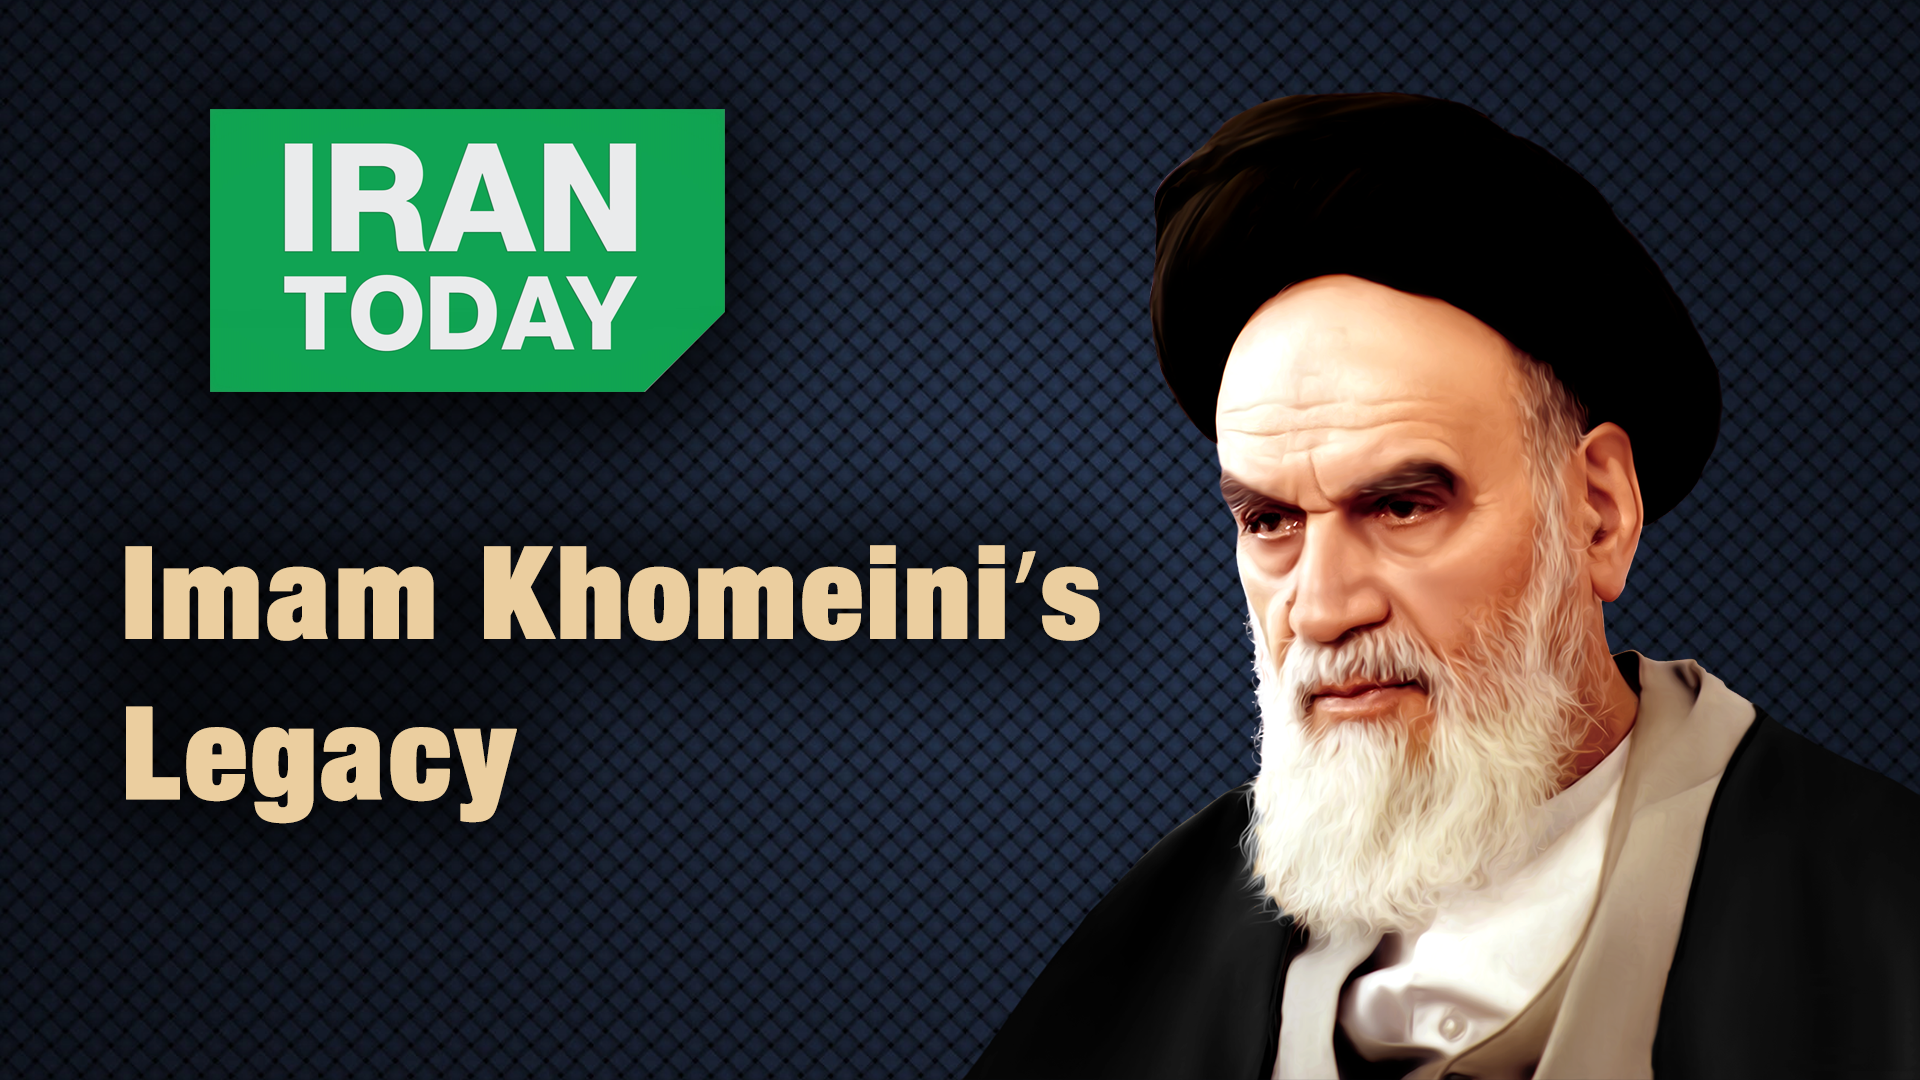 Imam Khomeini's legacy